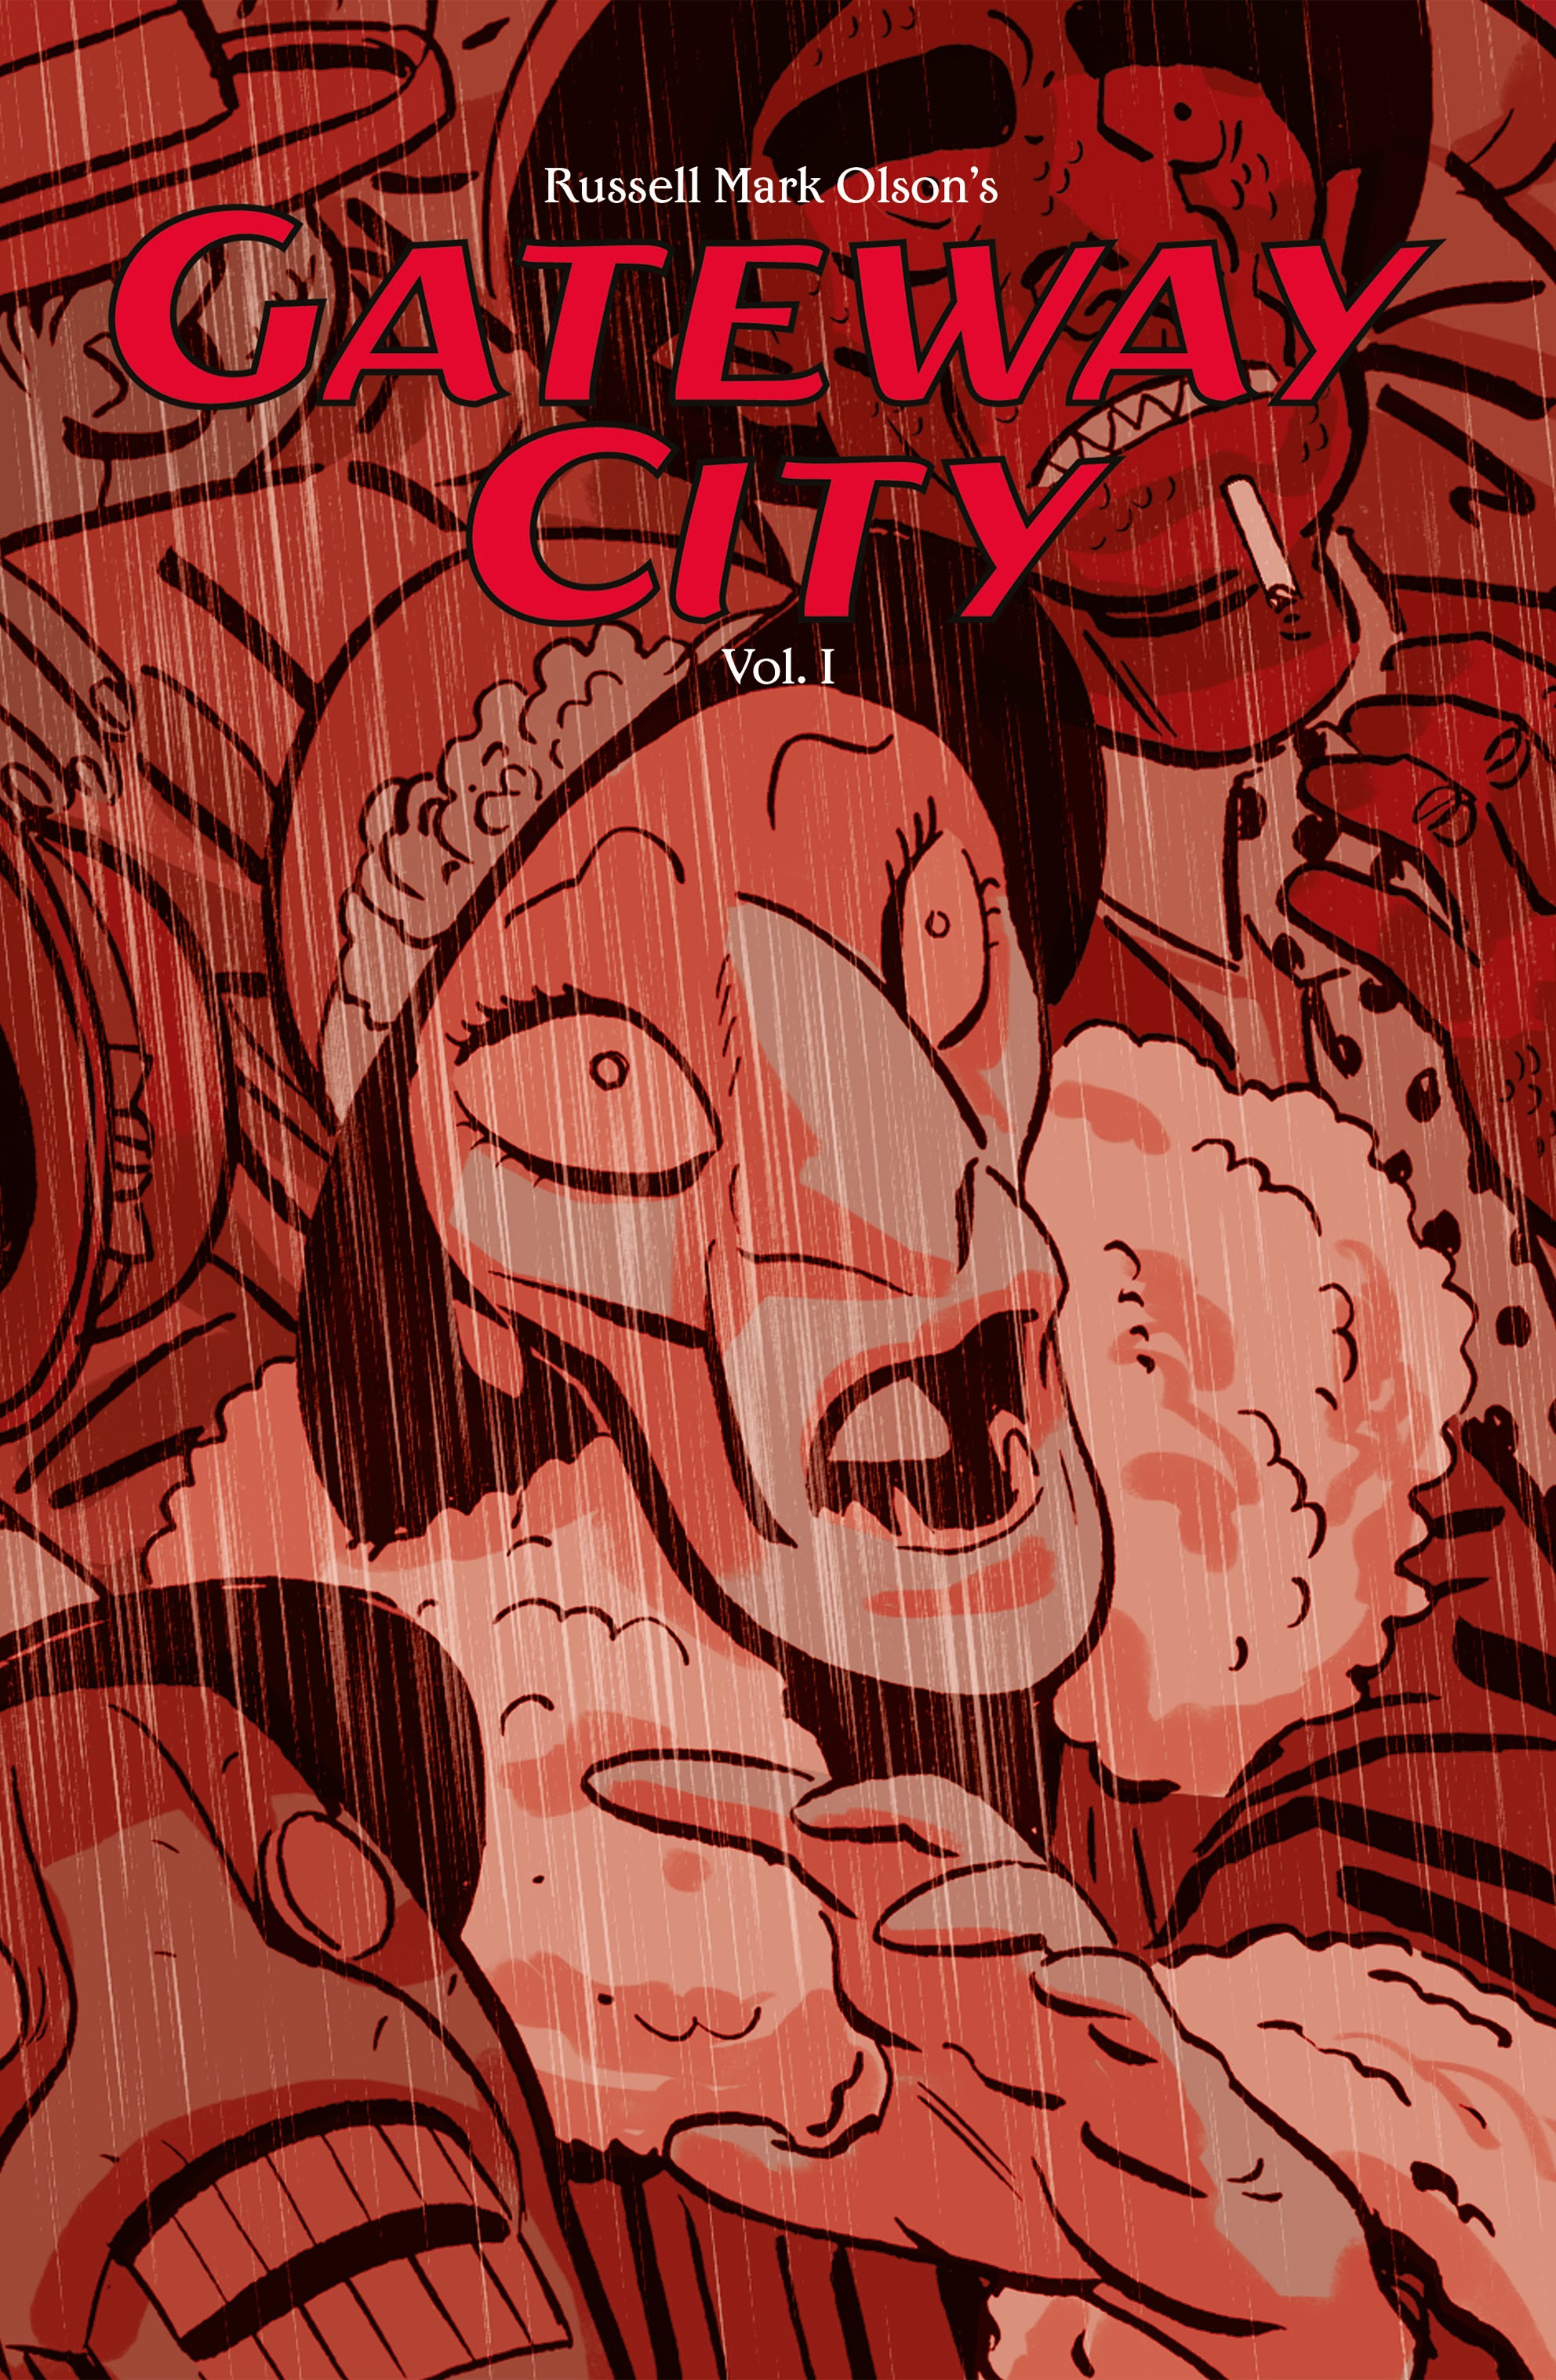 Read online Gateway City comic -  Issue # TPB - 3